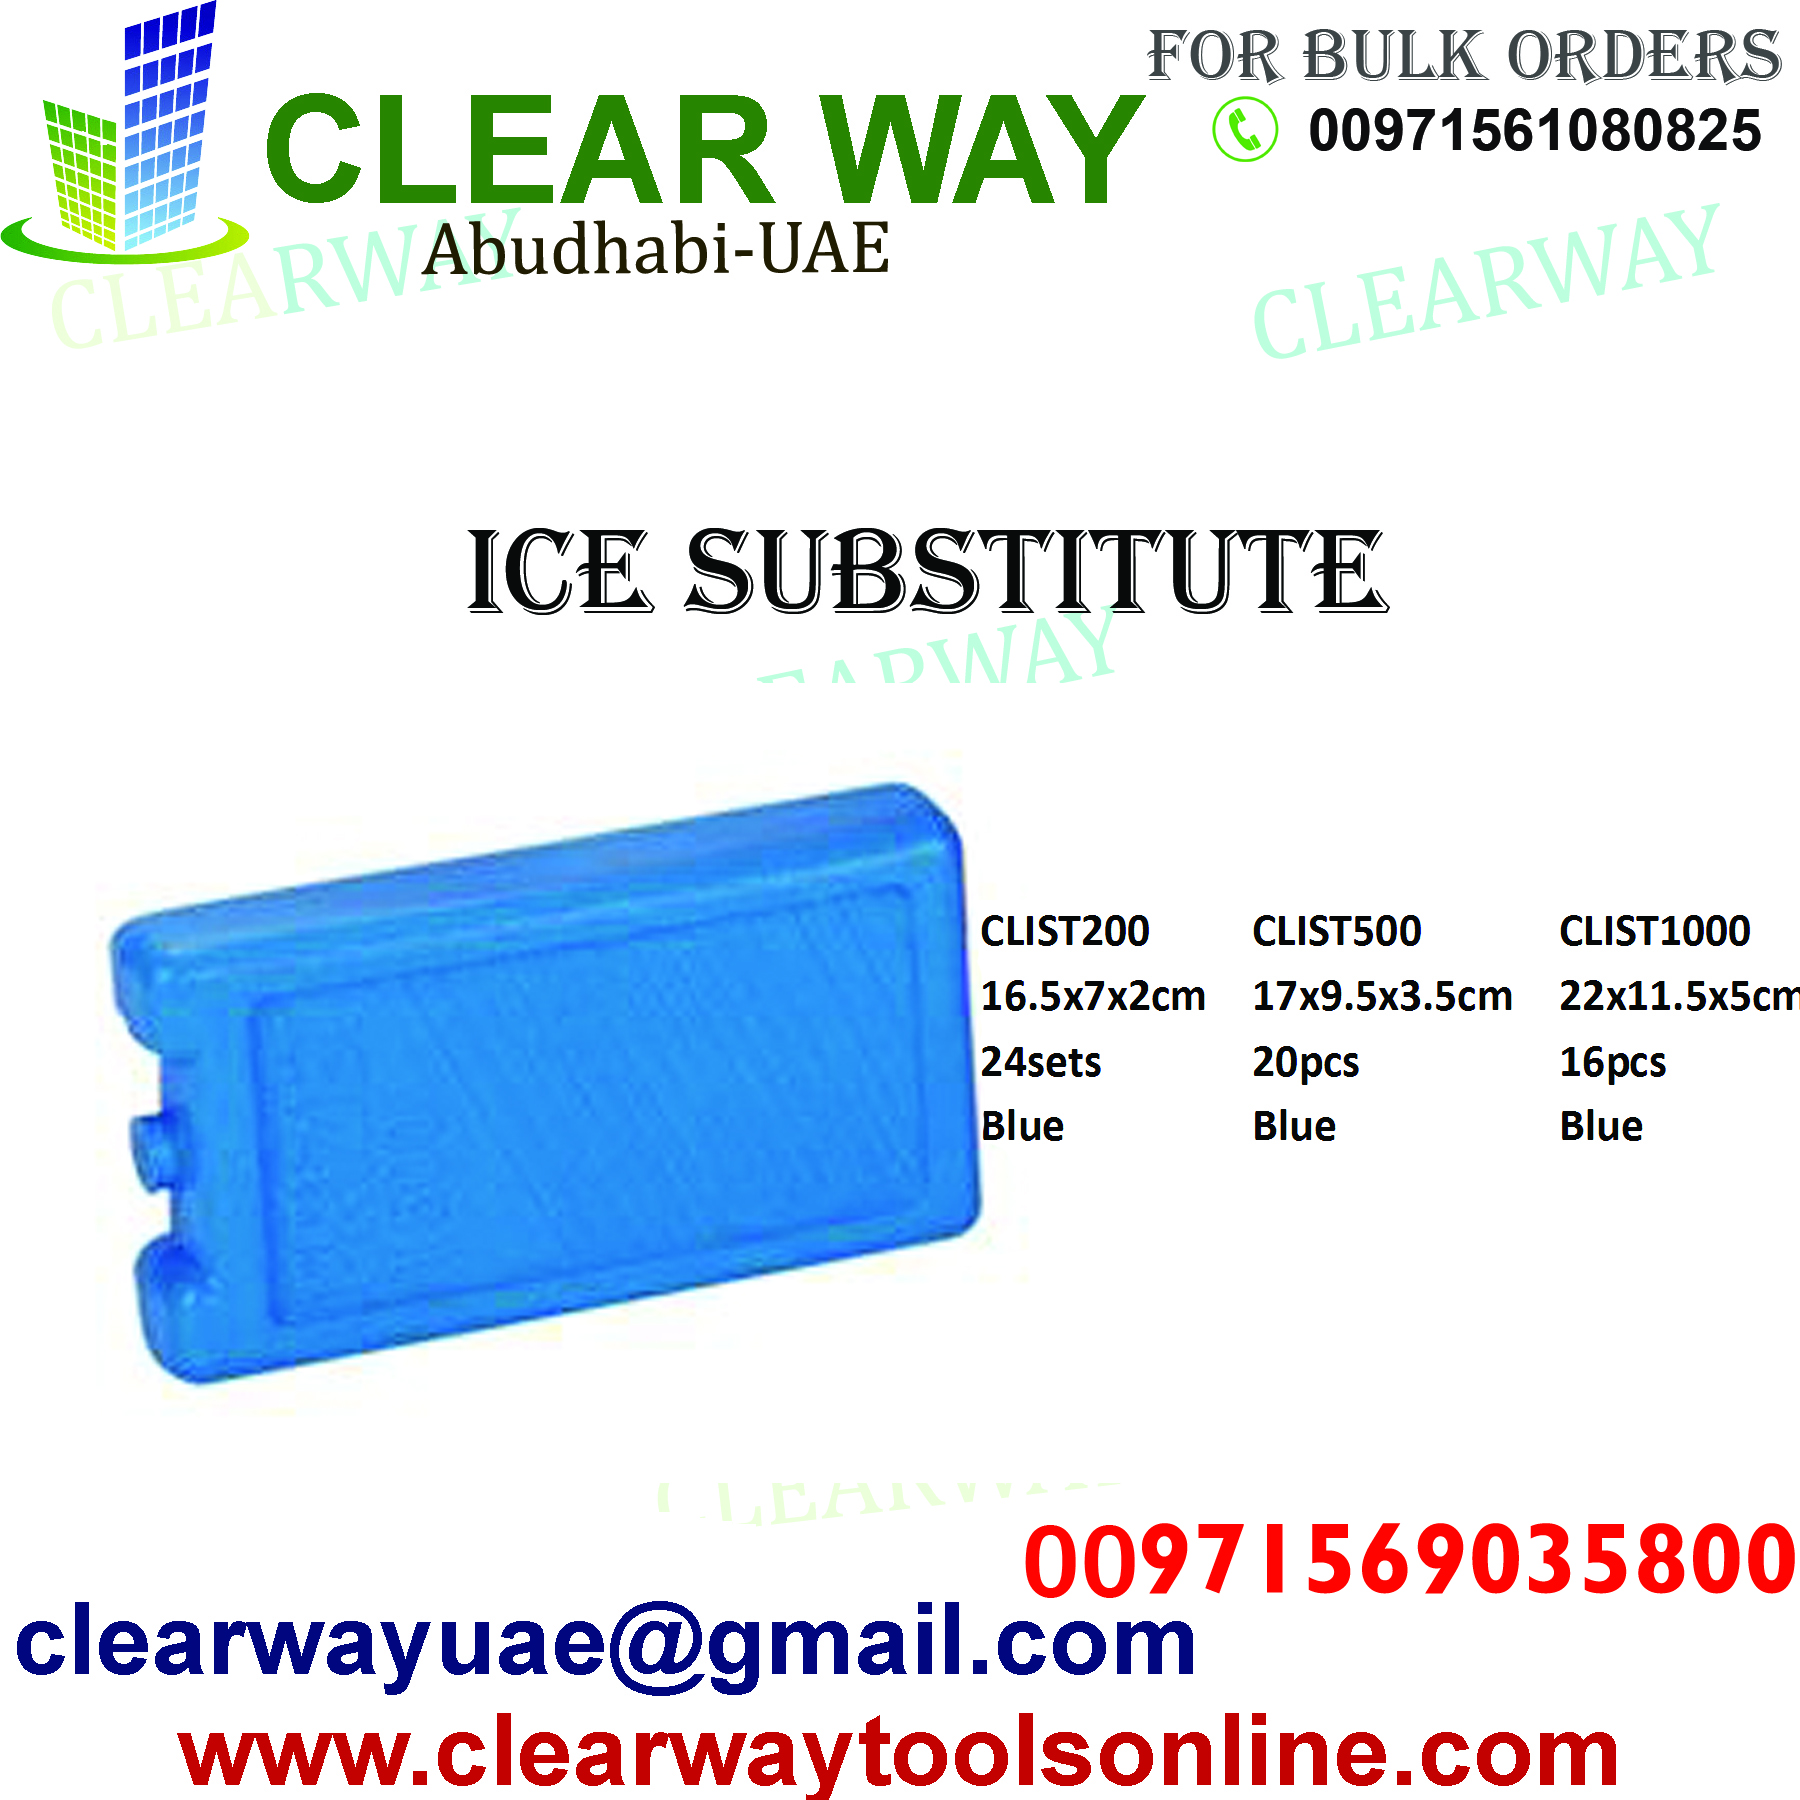 ice substitute,CLEARWAY,SANAYA,MUSSAFAH,ABUDHABI,UAE